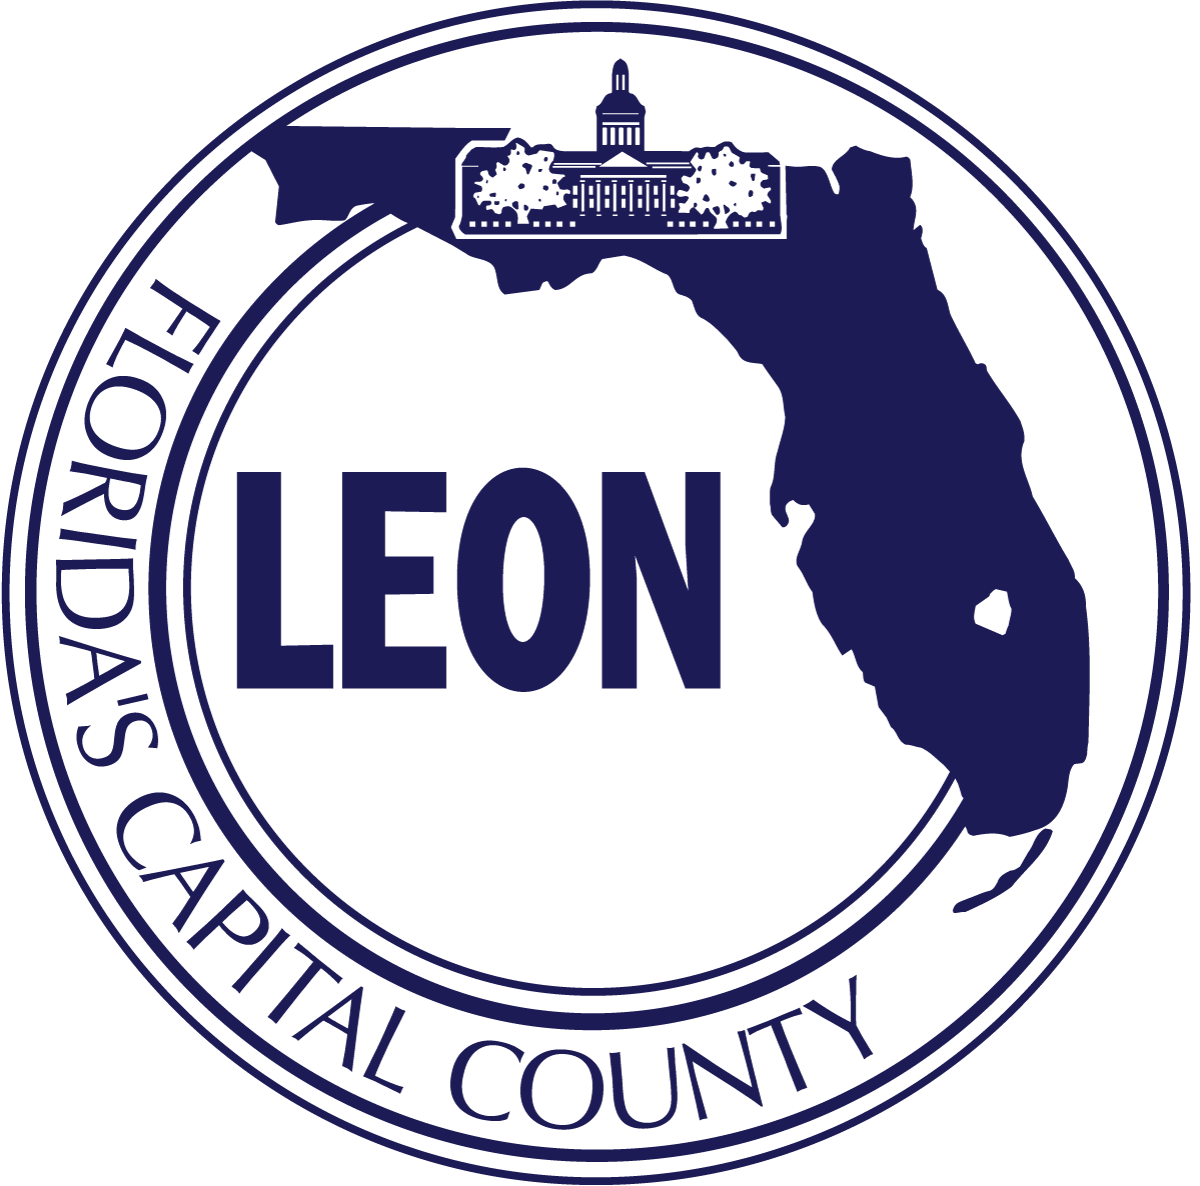 Leon County logo